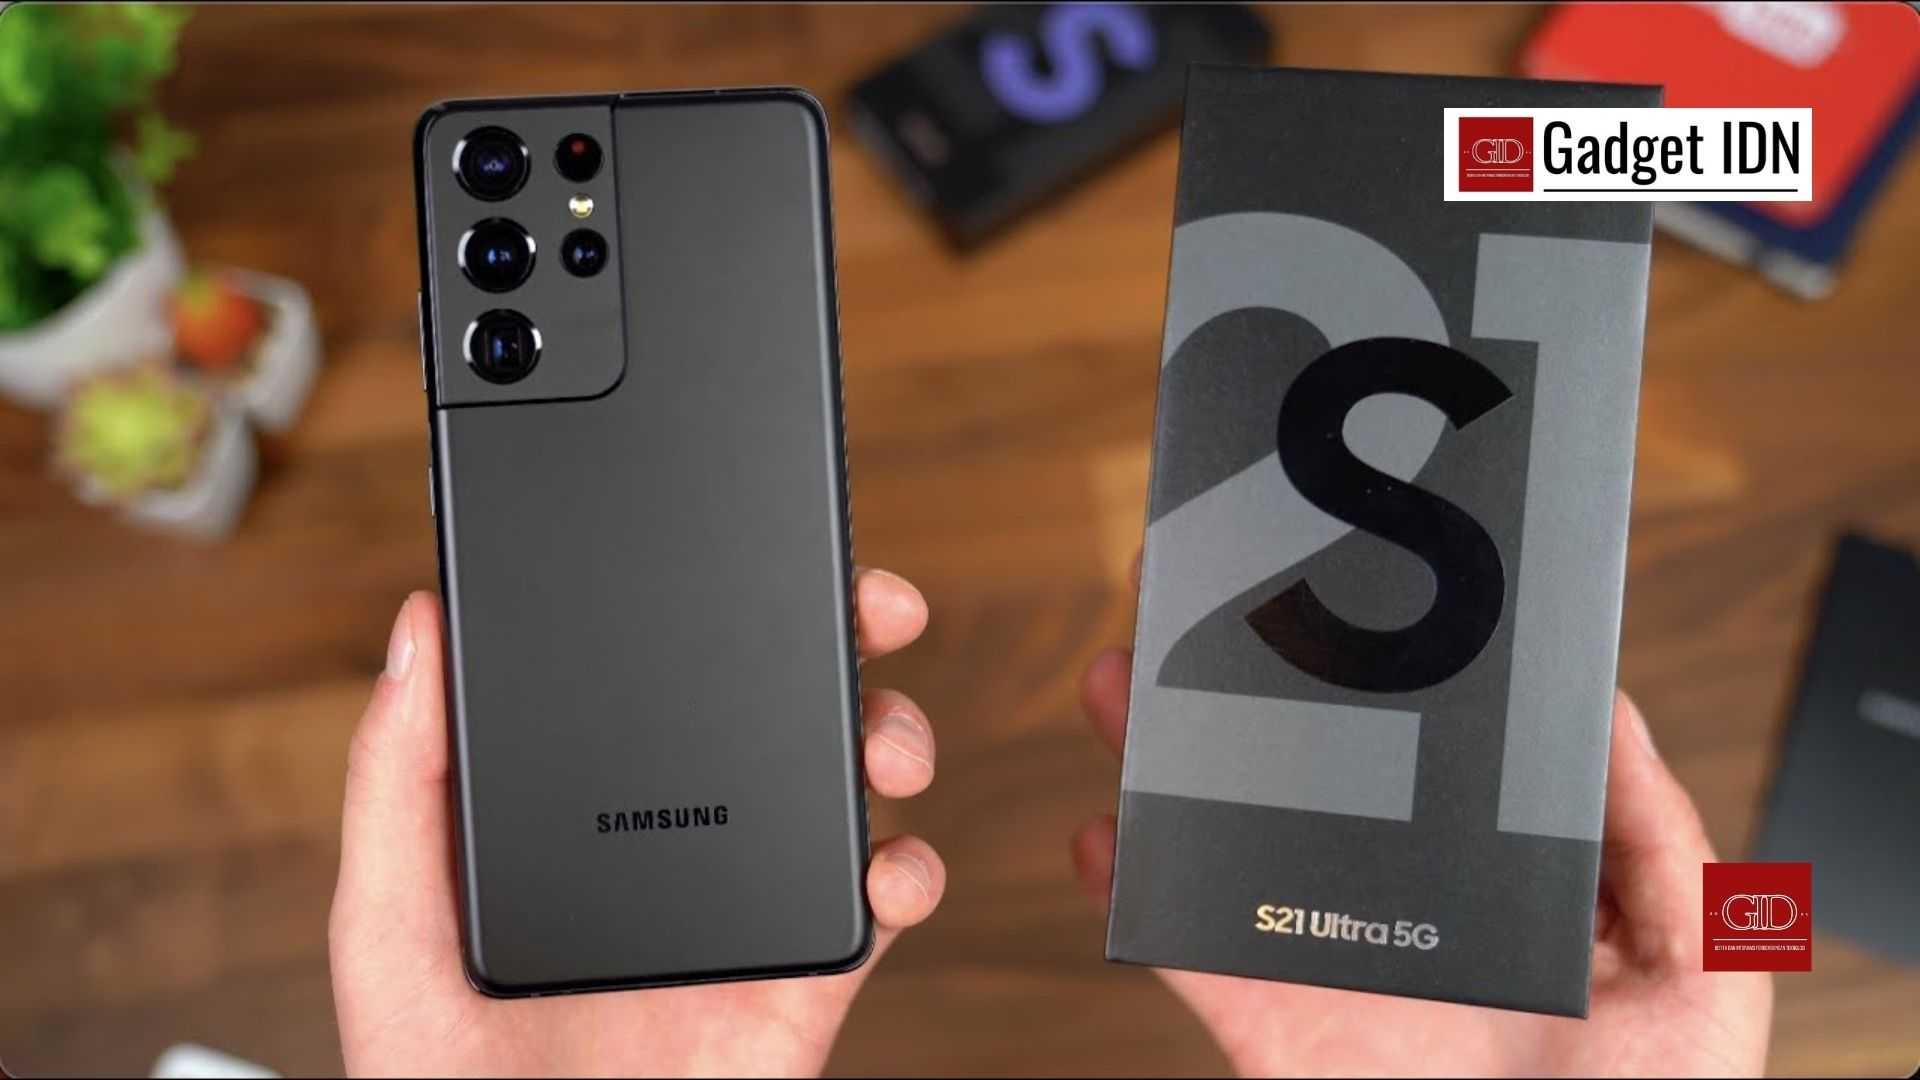 Bikin Tanpa Ribet Edit Konten YouTube Pakai Samsung Galaxy S21+ 5G